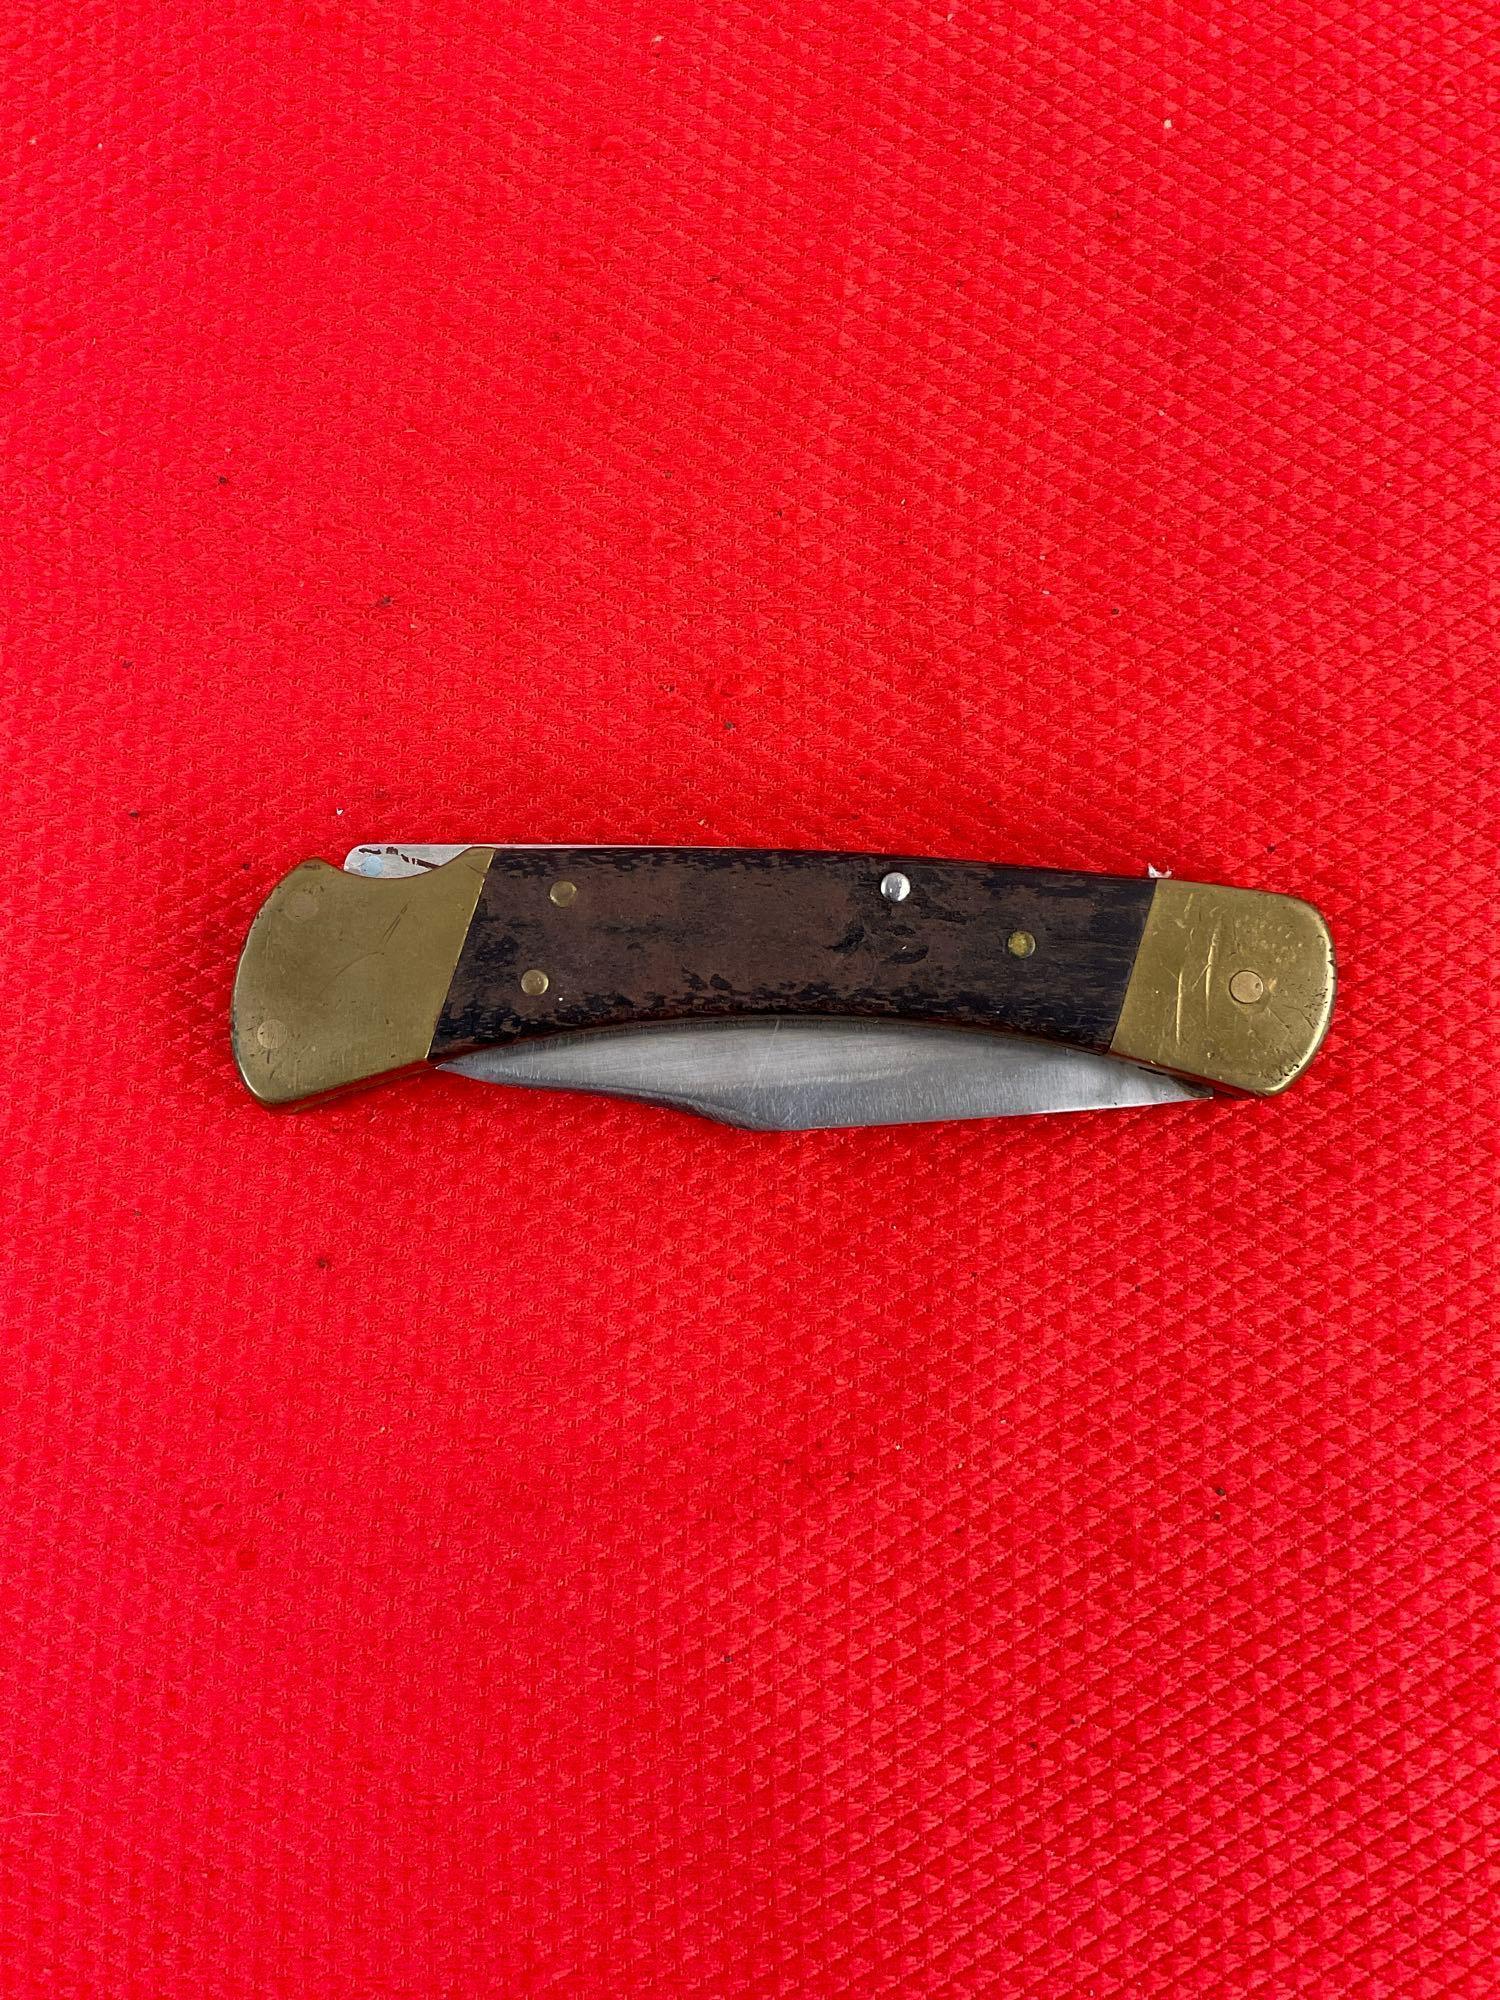 Vintage Buck 3.75" Steel Folding Blade Pocket Knife Model 110 w/ Ebony Handle & Sheath. See pics.